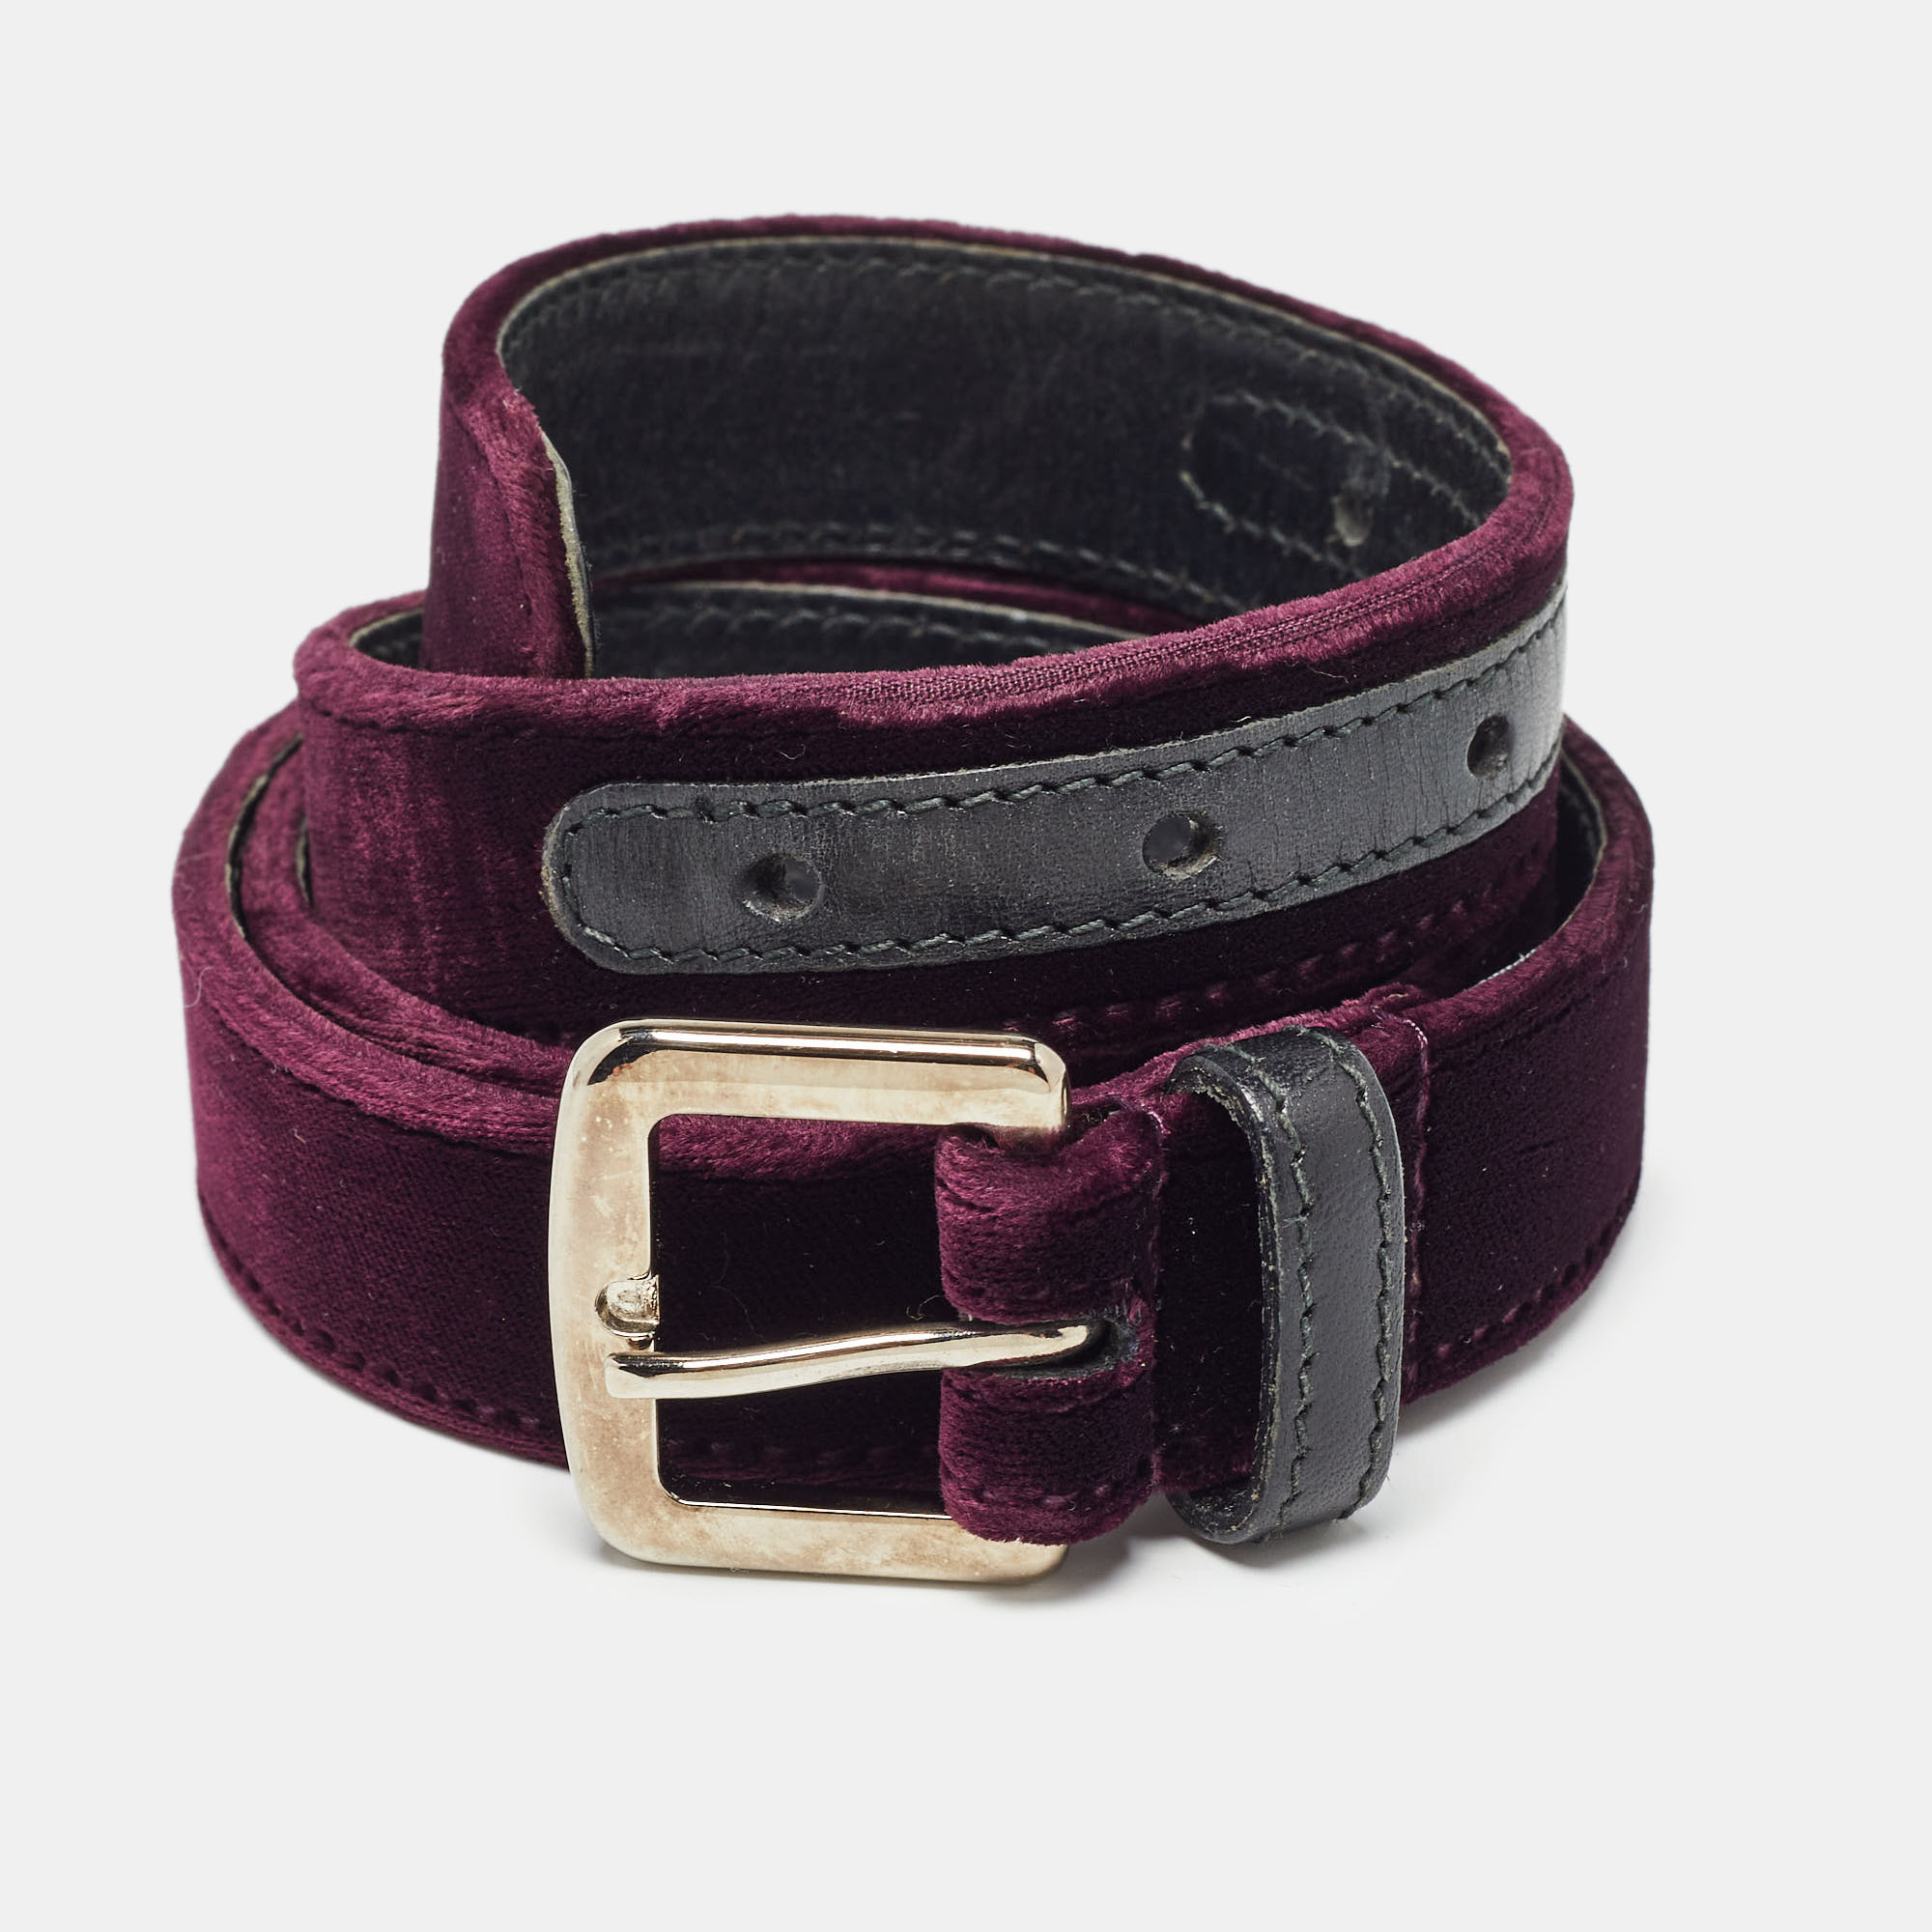 D&g purple/black velvet and leather buckle belt 90cm